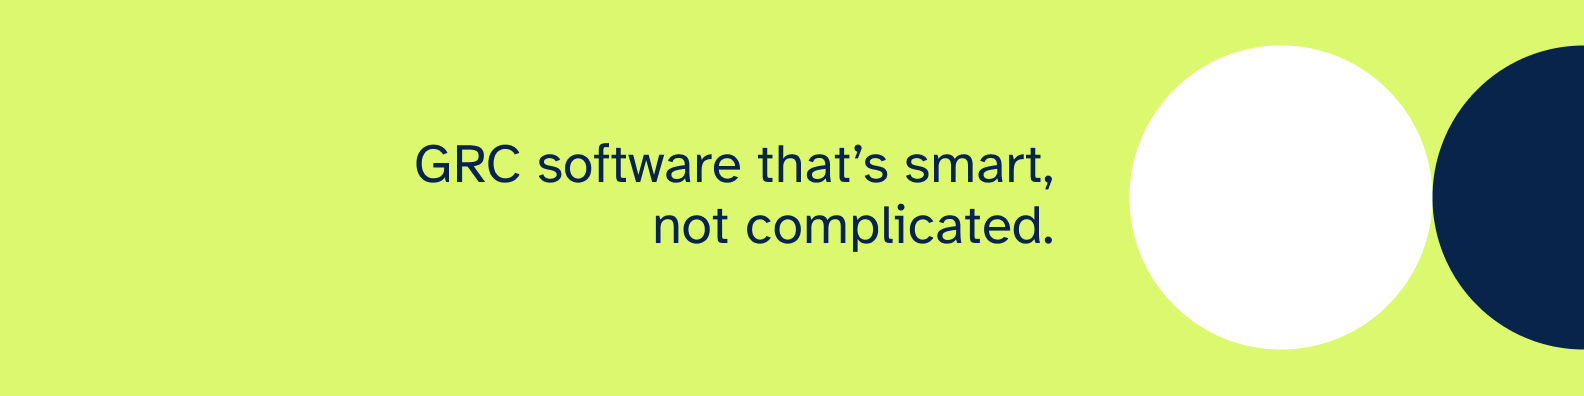 grc-software-smart-not-complicated-banner-1